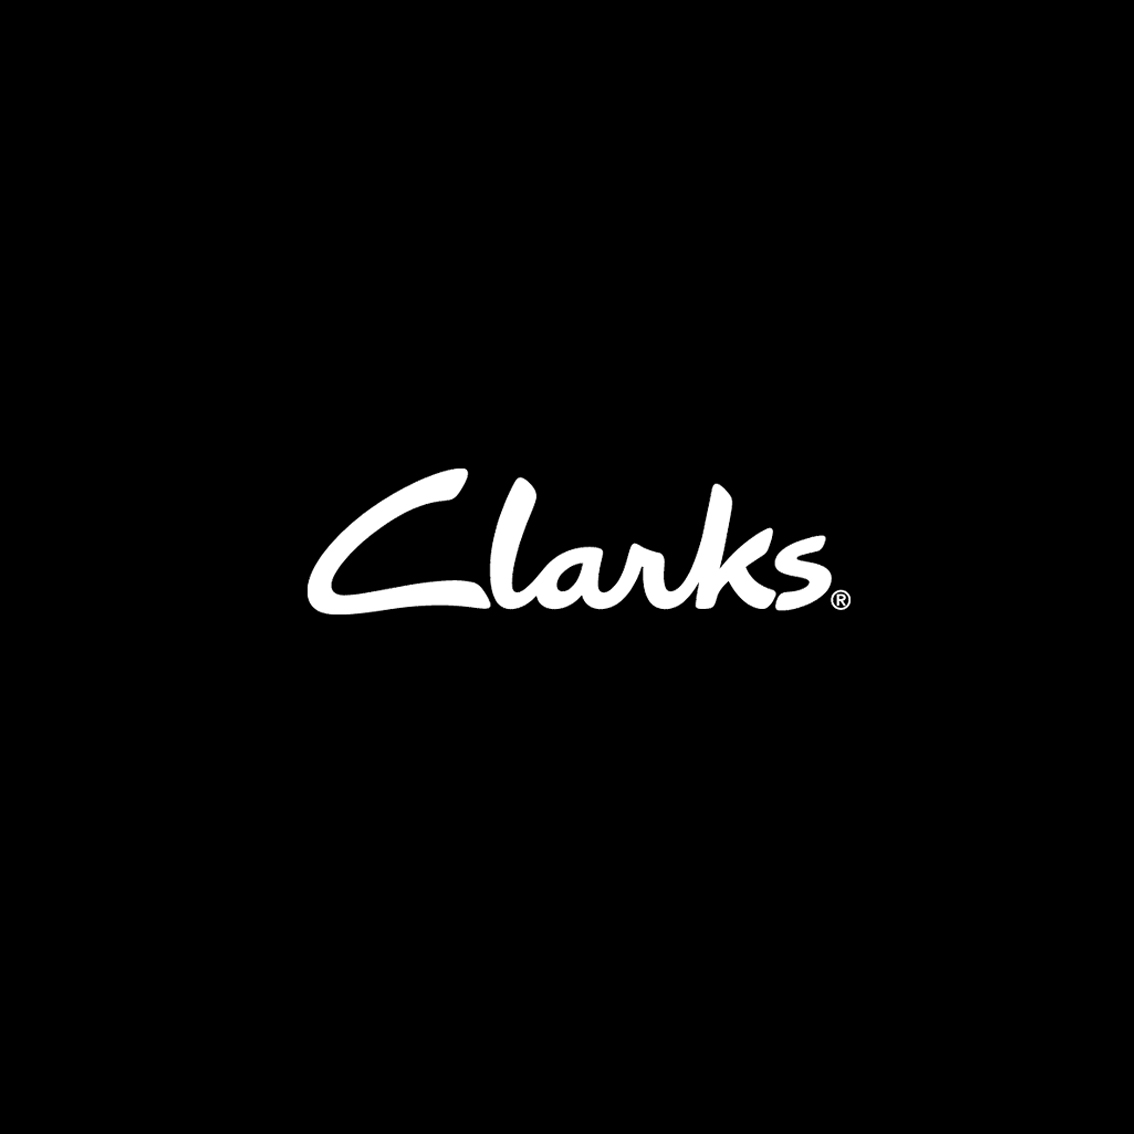 Clarks.jpg